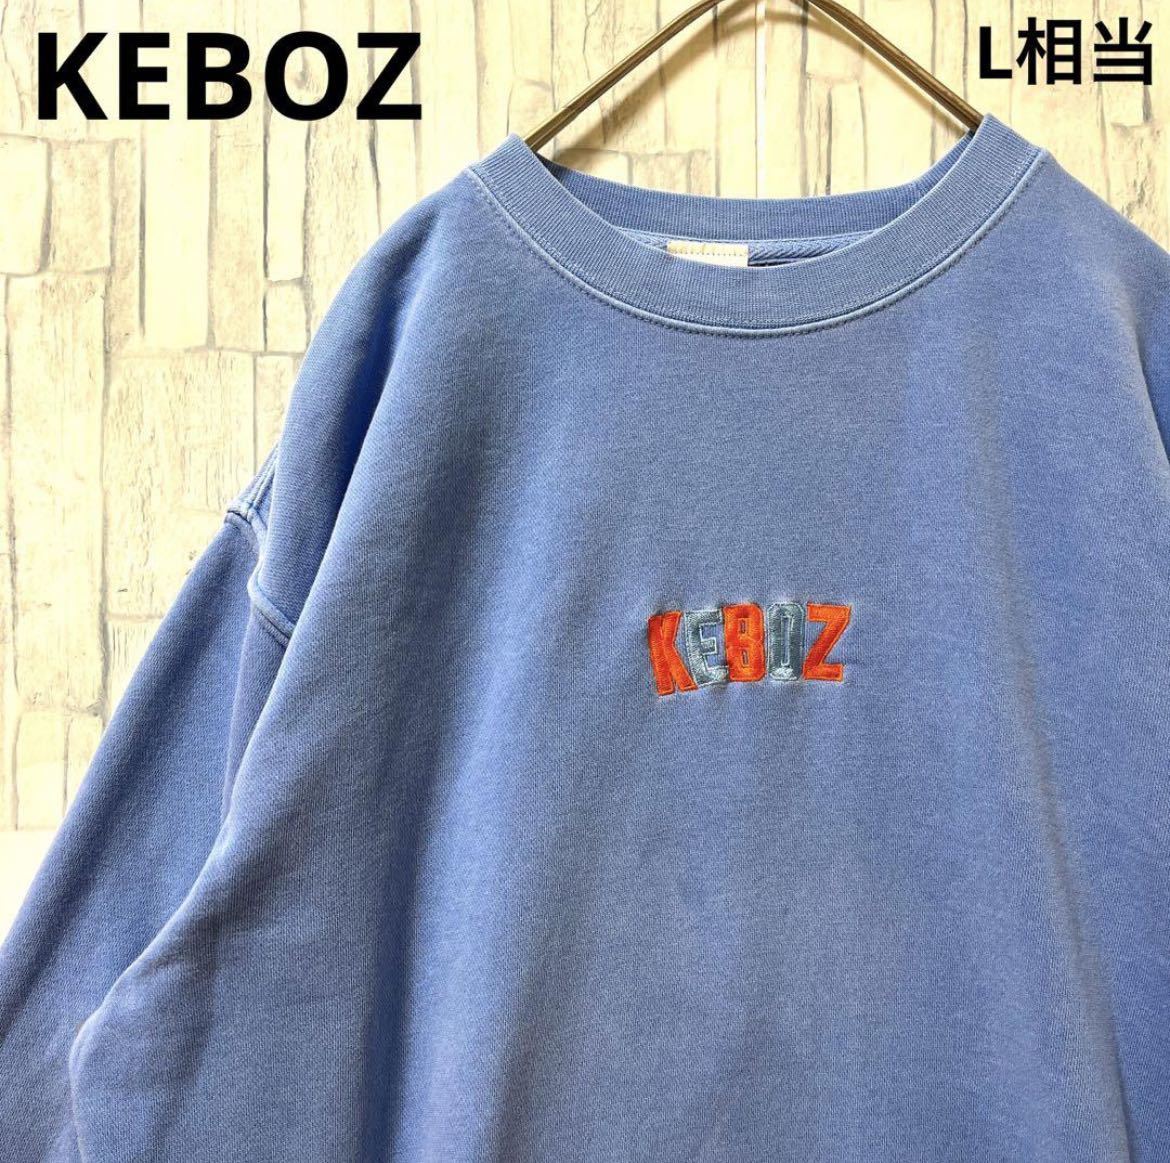 KEBOZ ケボズ トレーナー スウェット サイズM デカロゴ センターロゴ 刺繍ロゴ ブルー 長袖 プルオーバー 裏起毛 送料無料